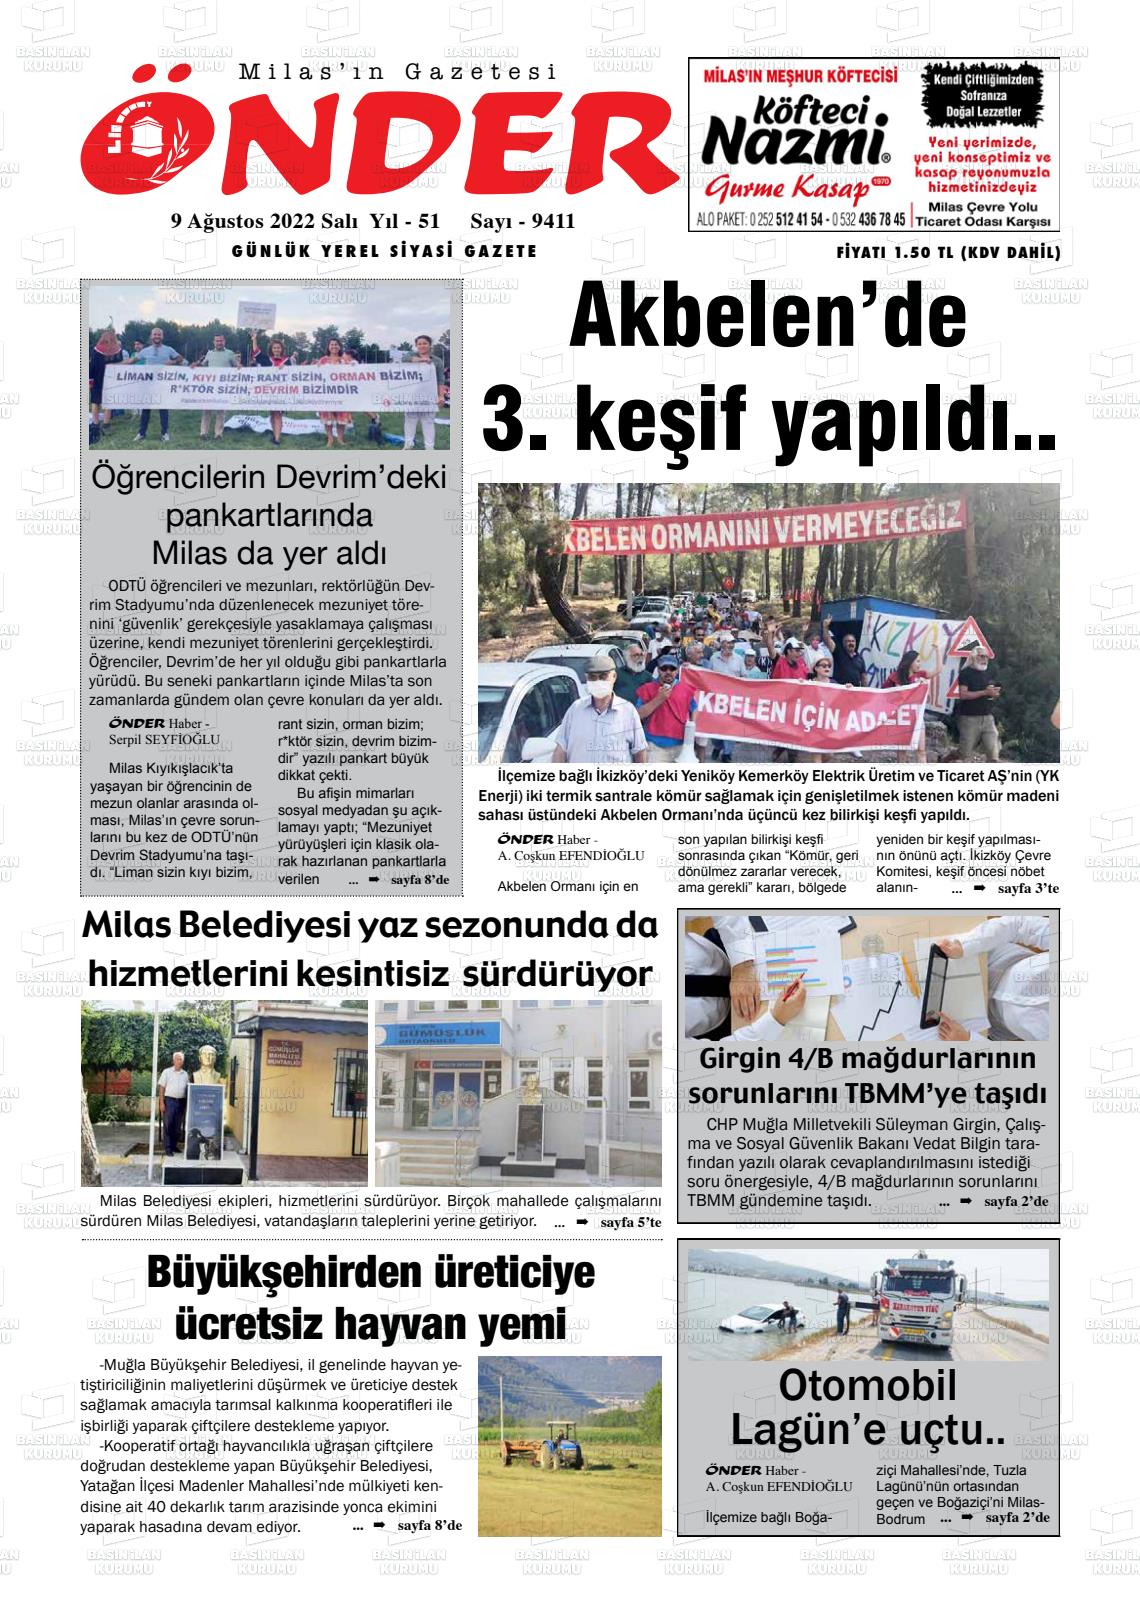 09 Ağustos 2022 Milas Önder Gazete Manşeti